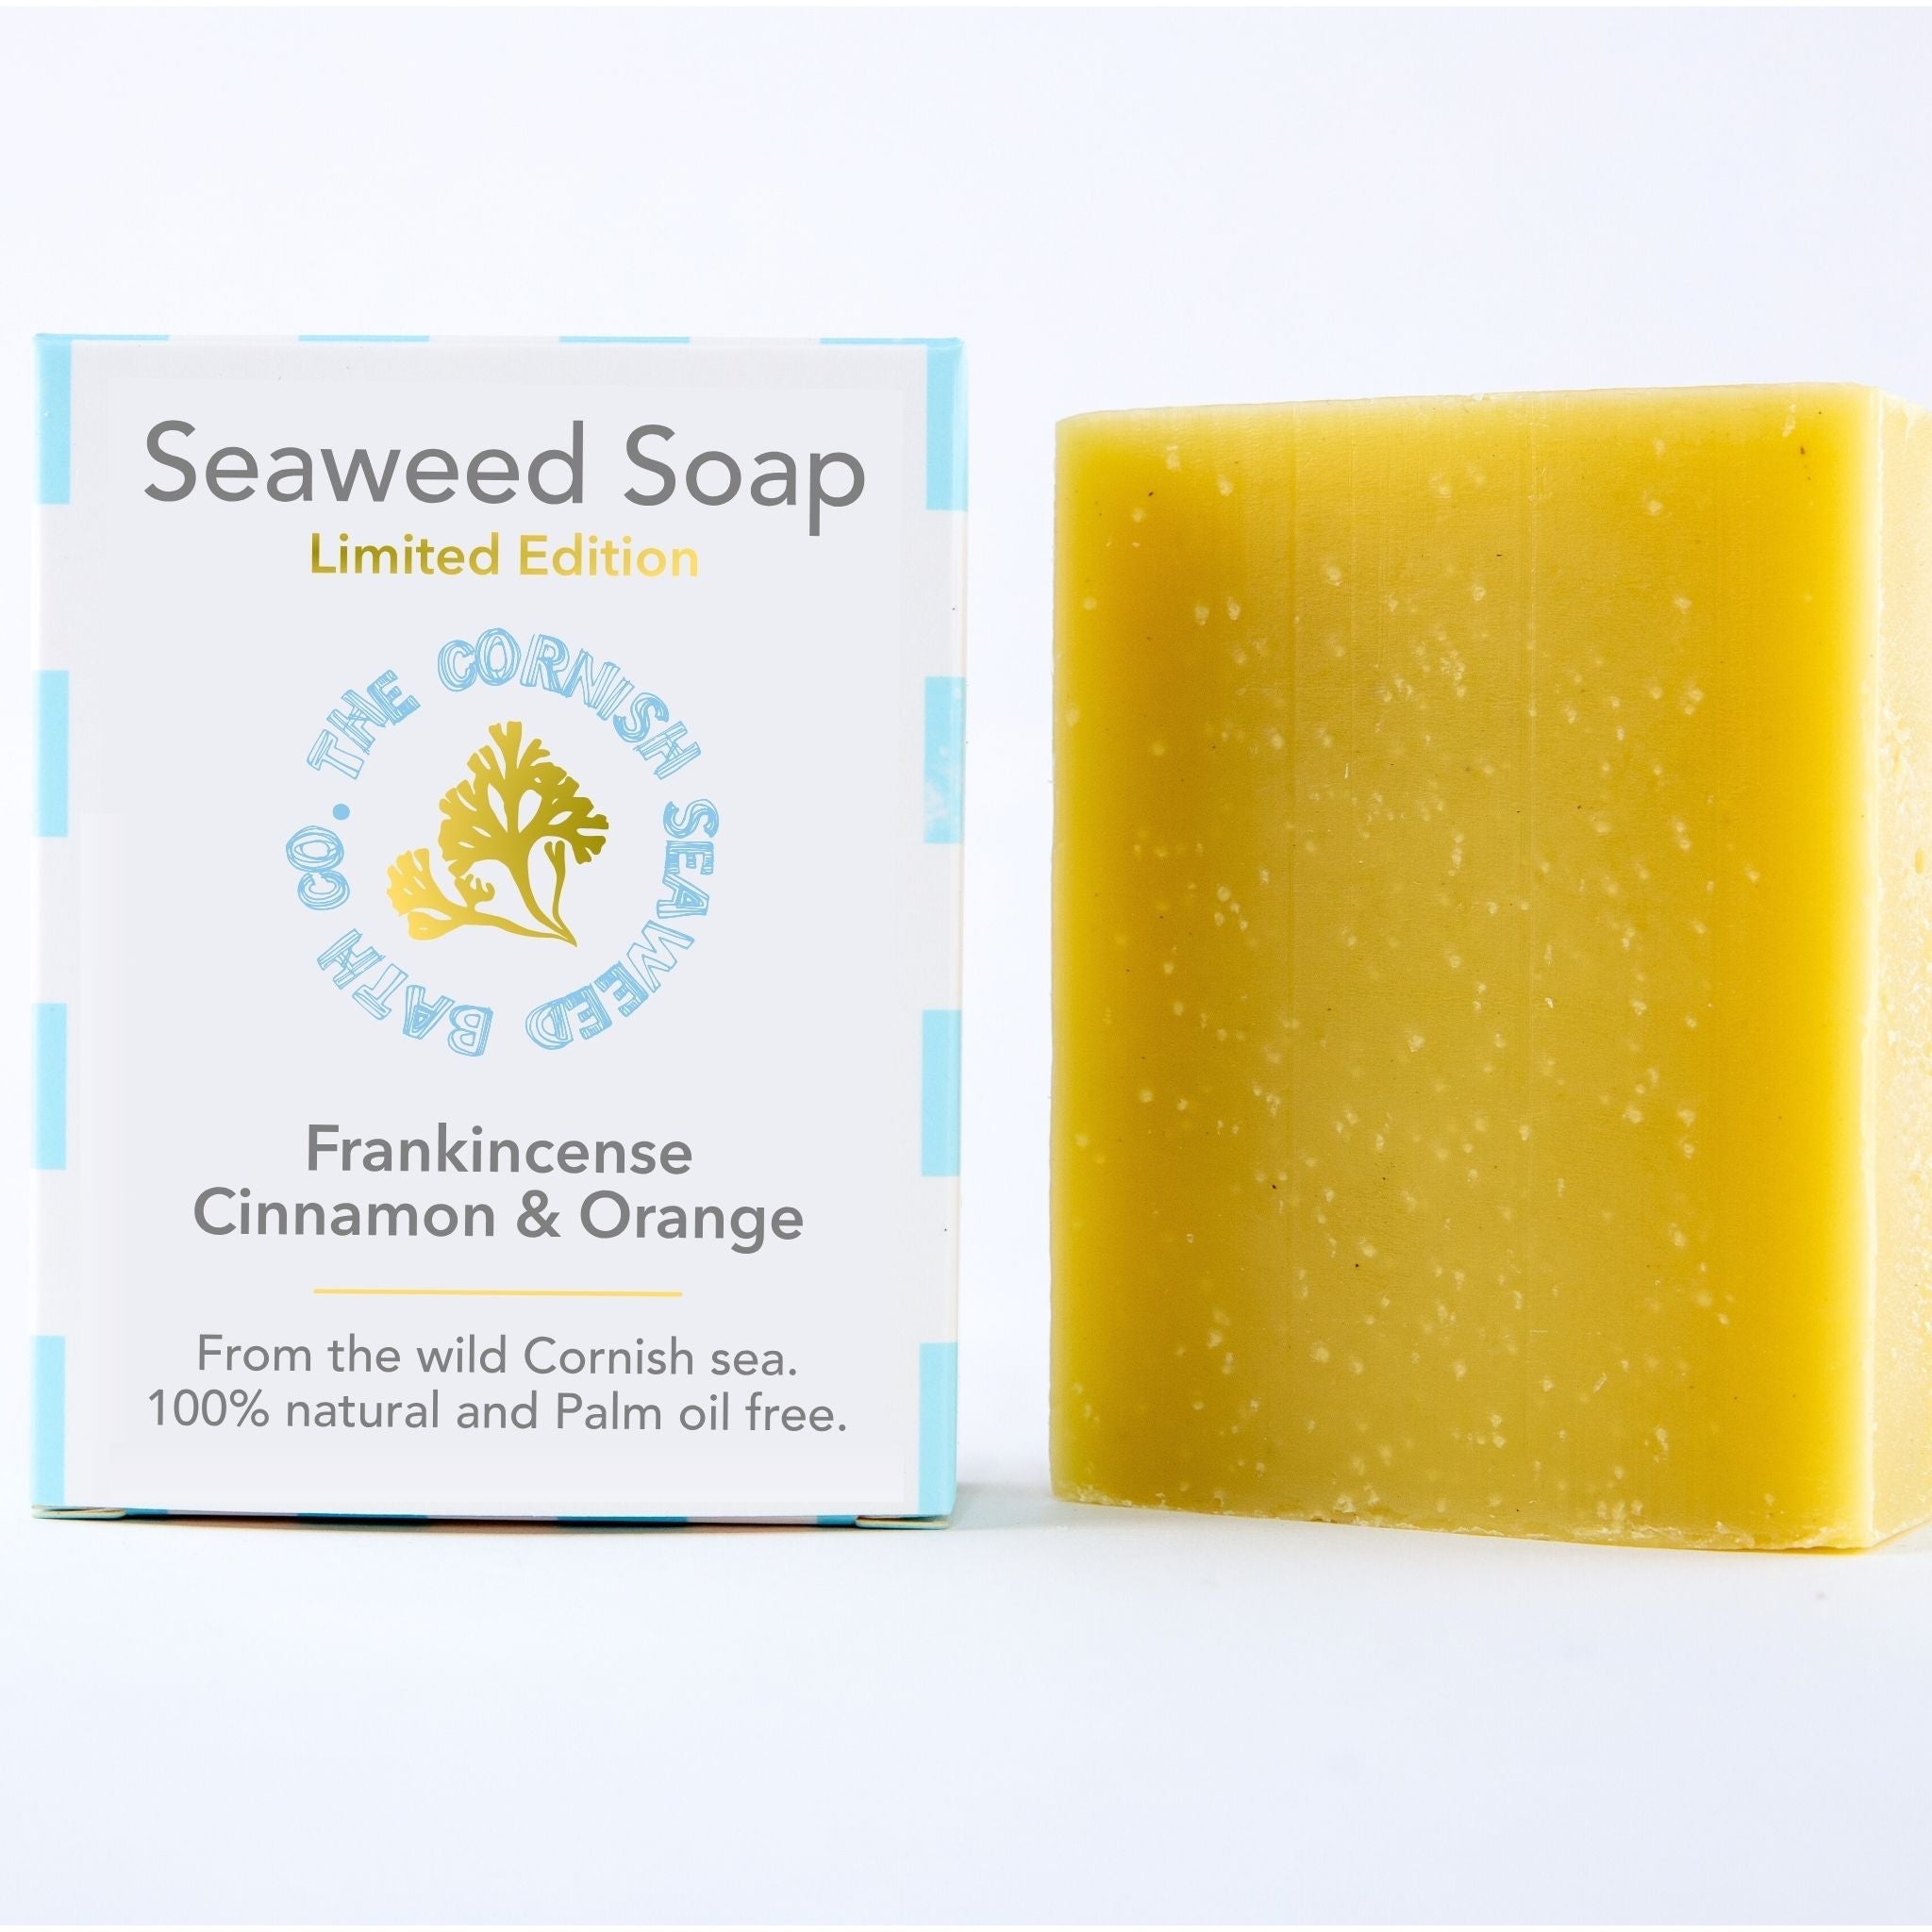 Limited Edition Seaweed Soap - The Cornish Seaweed Bath Co.